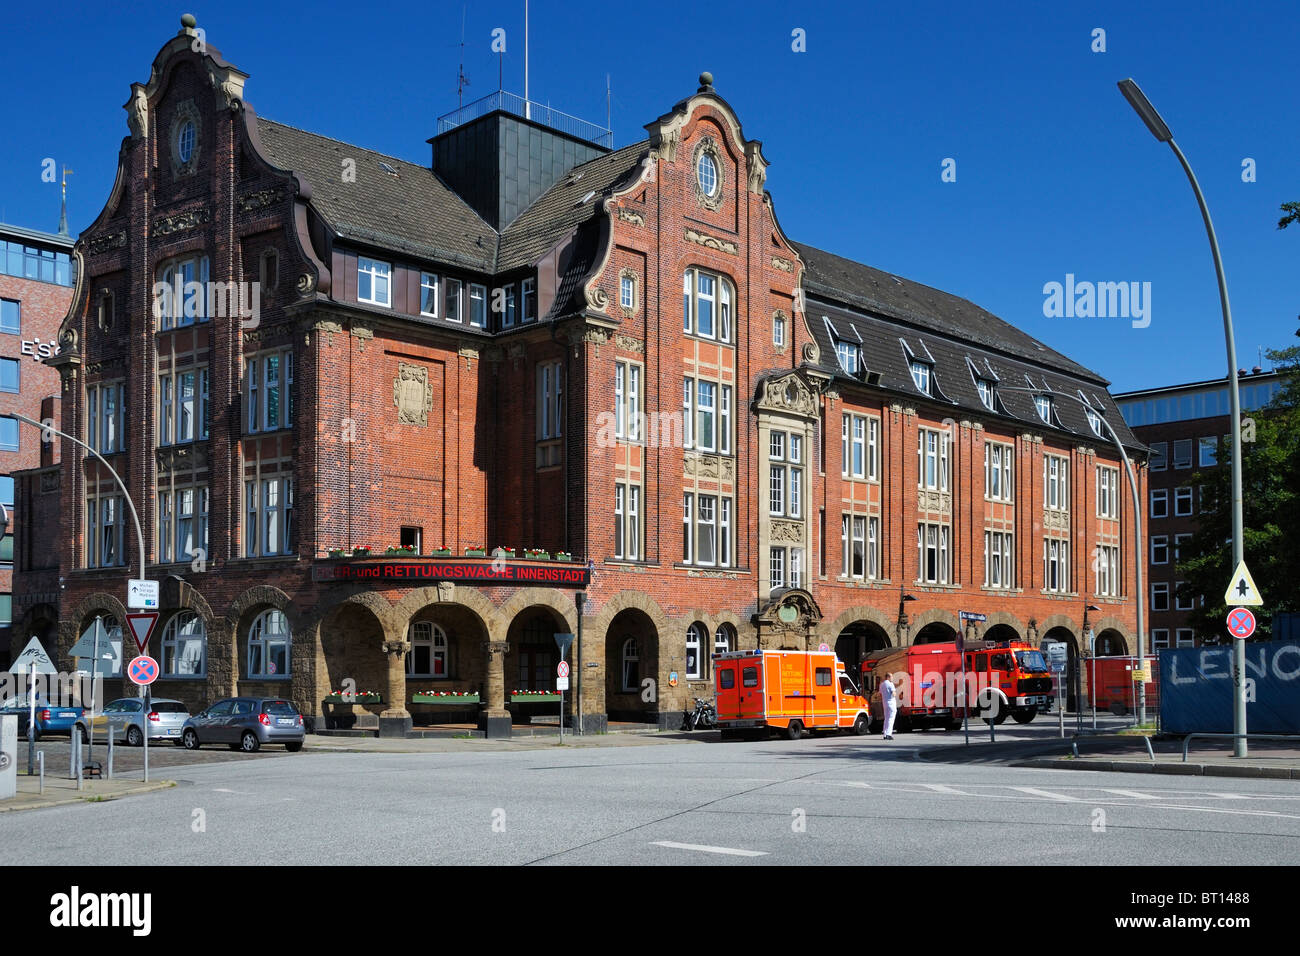 The main fire station (Feuer- und Rettungswache Innenstadt) in the inner-city of Hamburg, Germany. Stock Photo